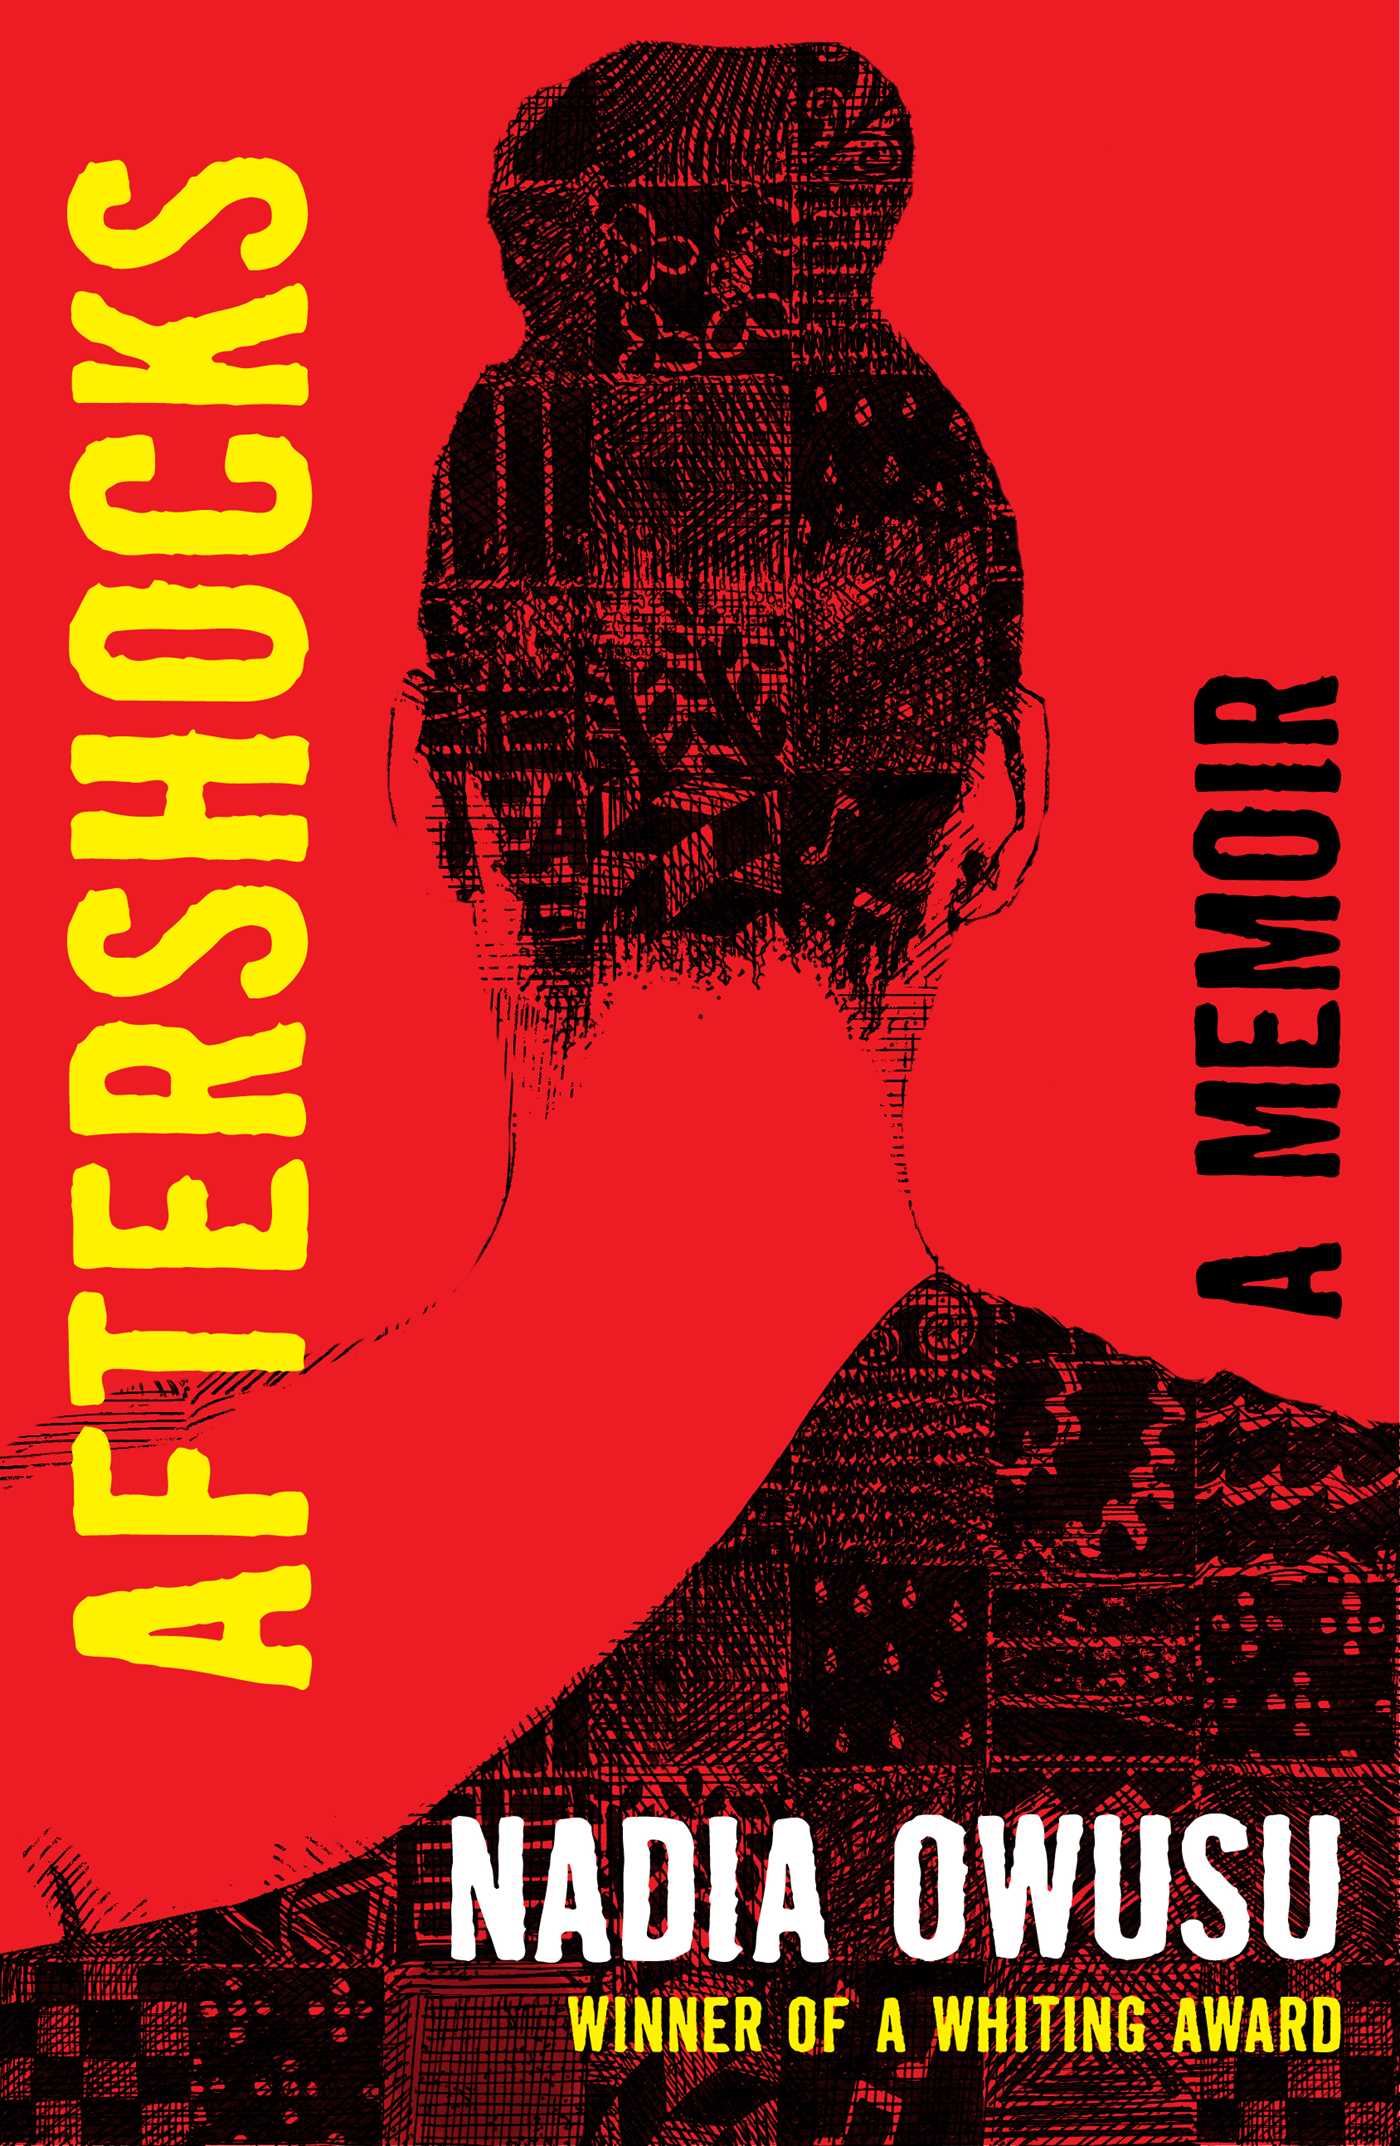 Cover image for "Aftershocks" 